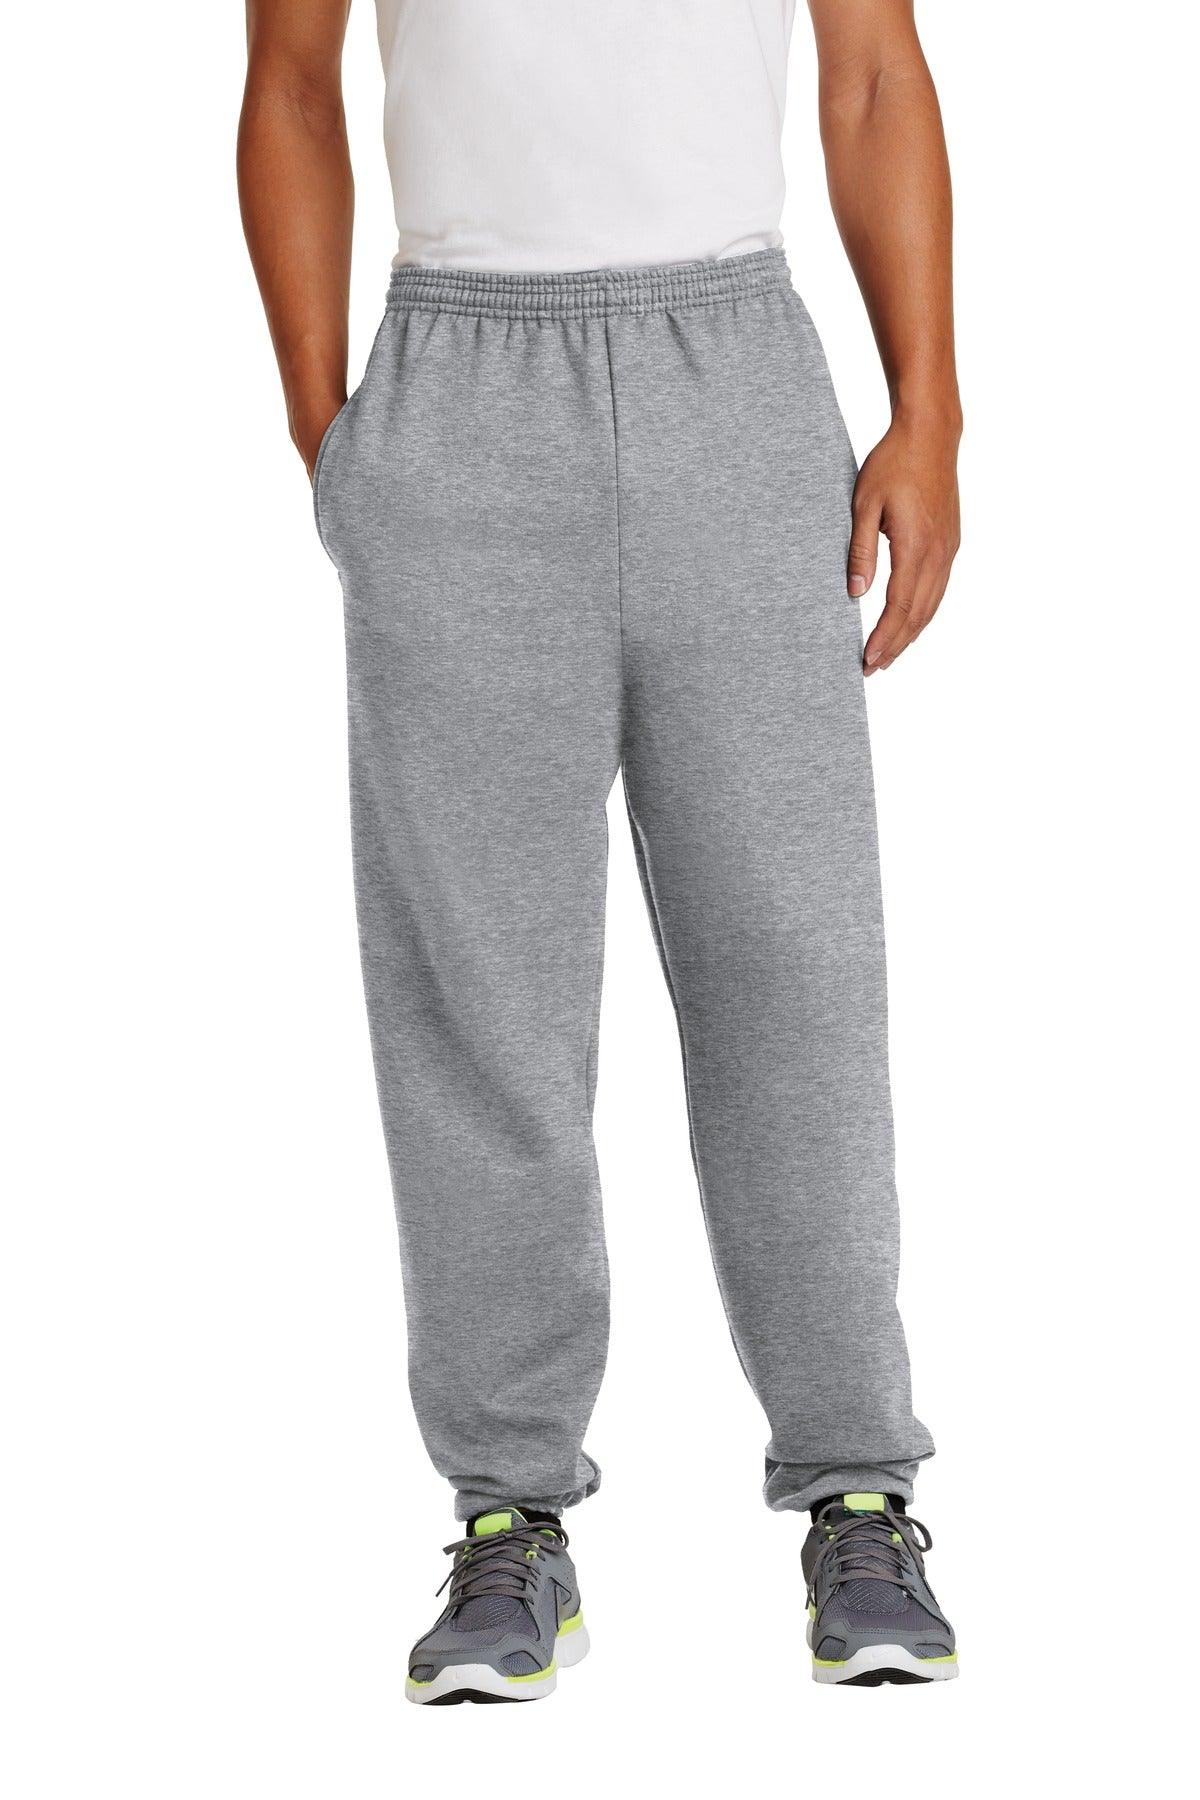 Port & Company - Essential Fleece Sweatpant with Pockets. PC90P - Dresses Max